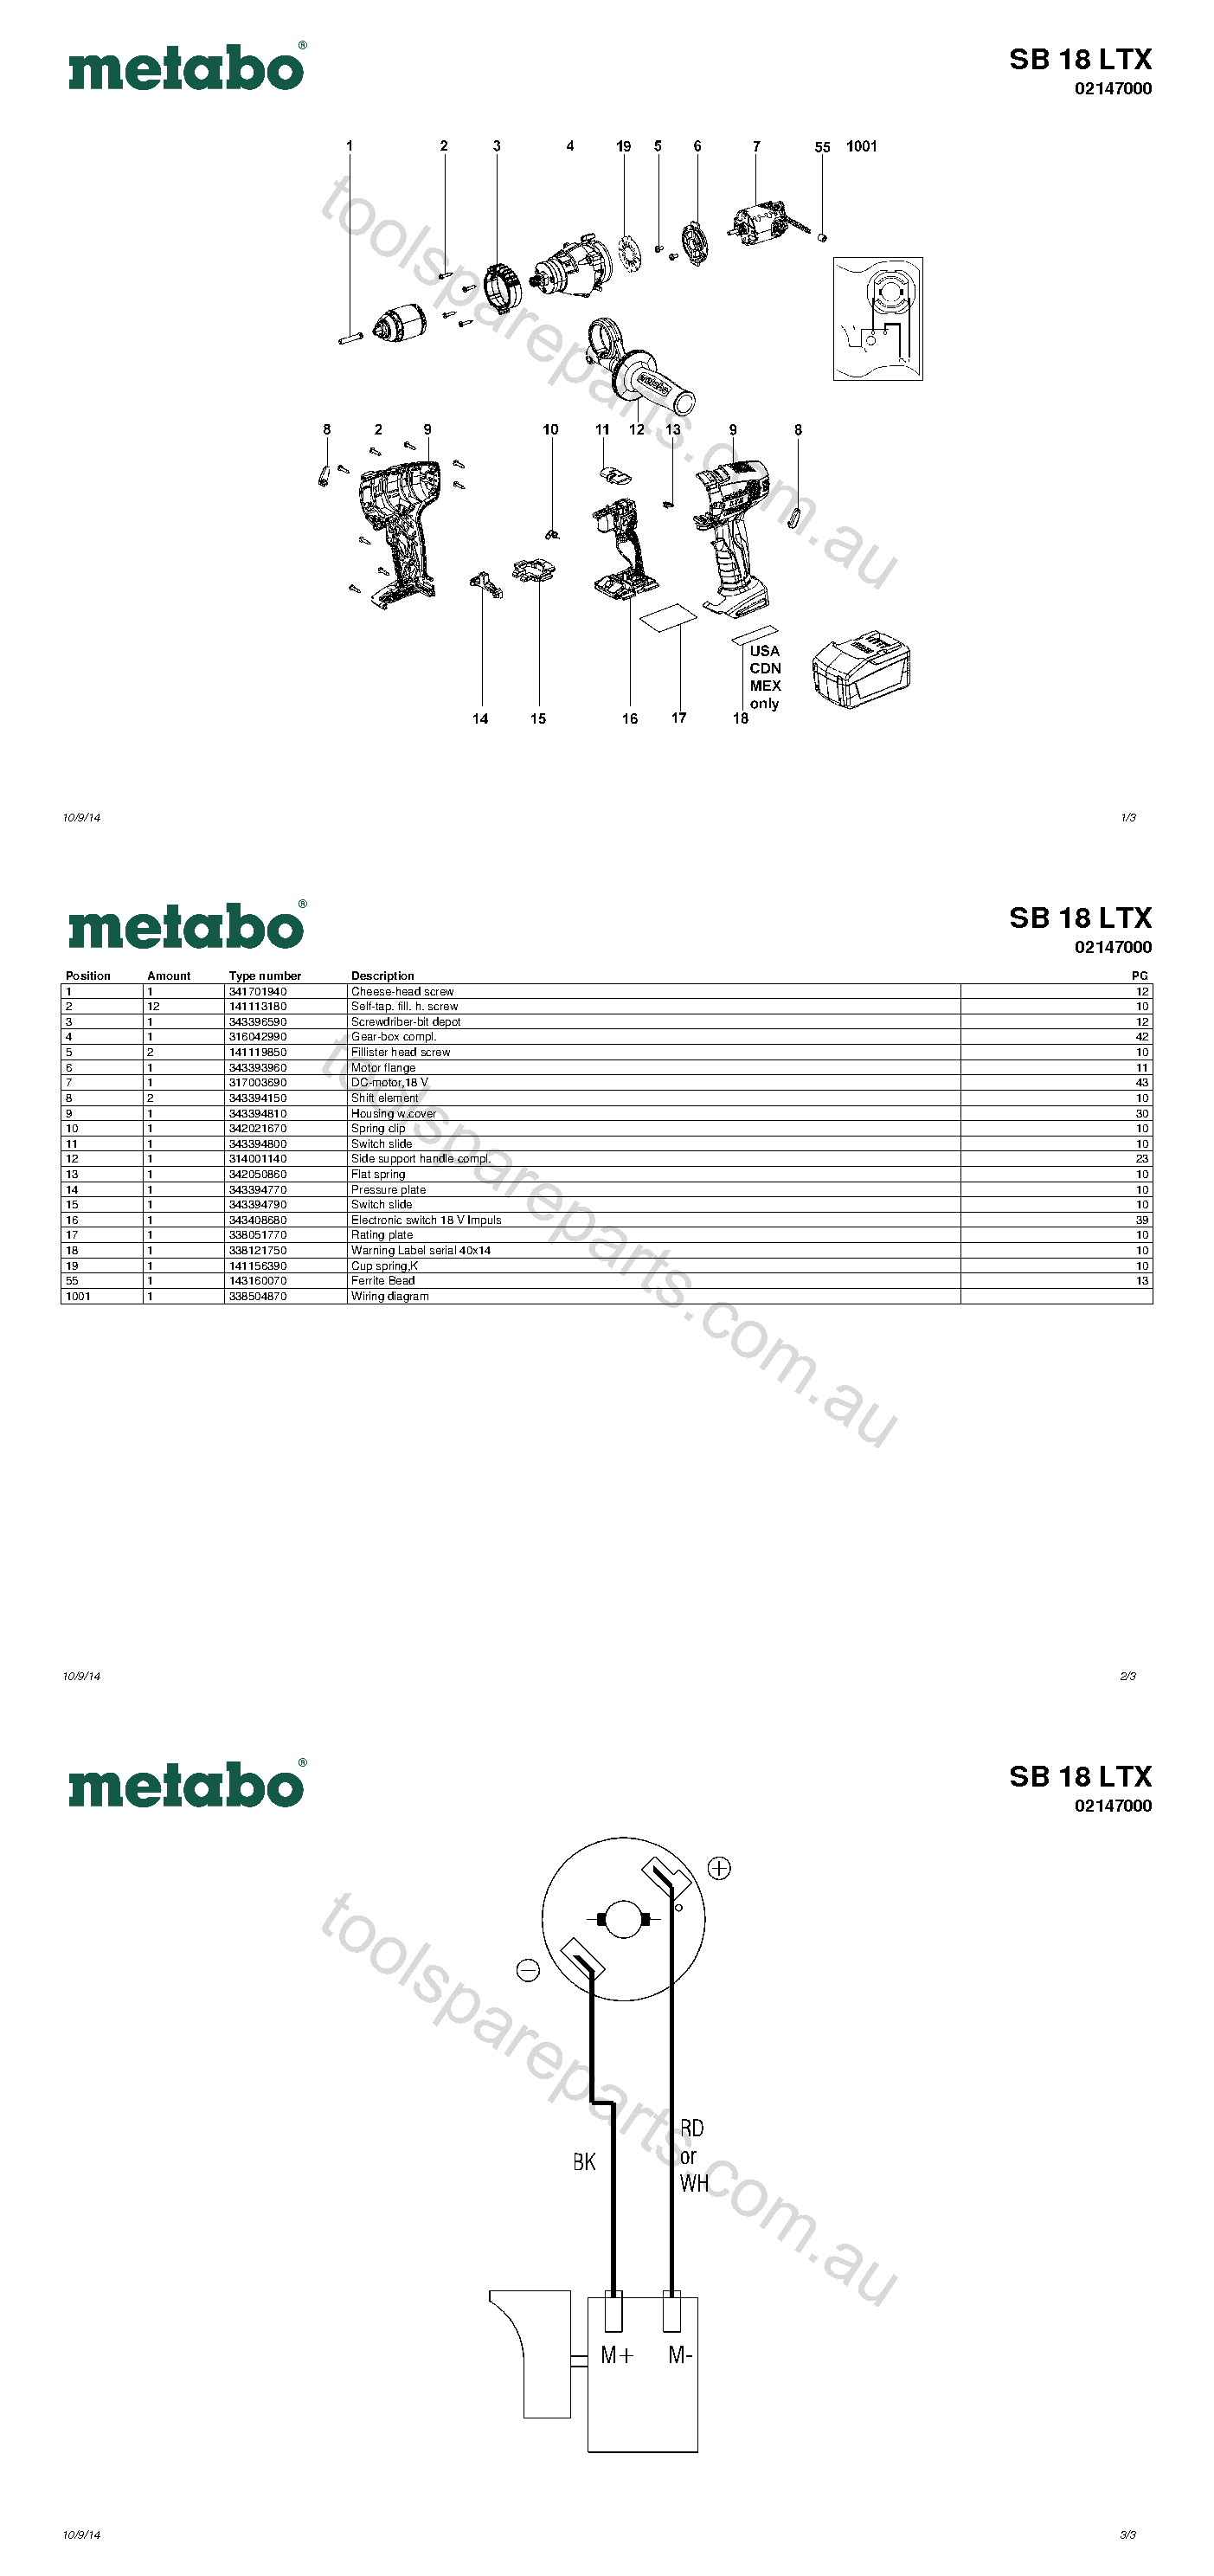 Metabo SB 18 LTX 02147000  Diagram 1